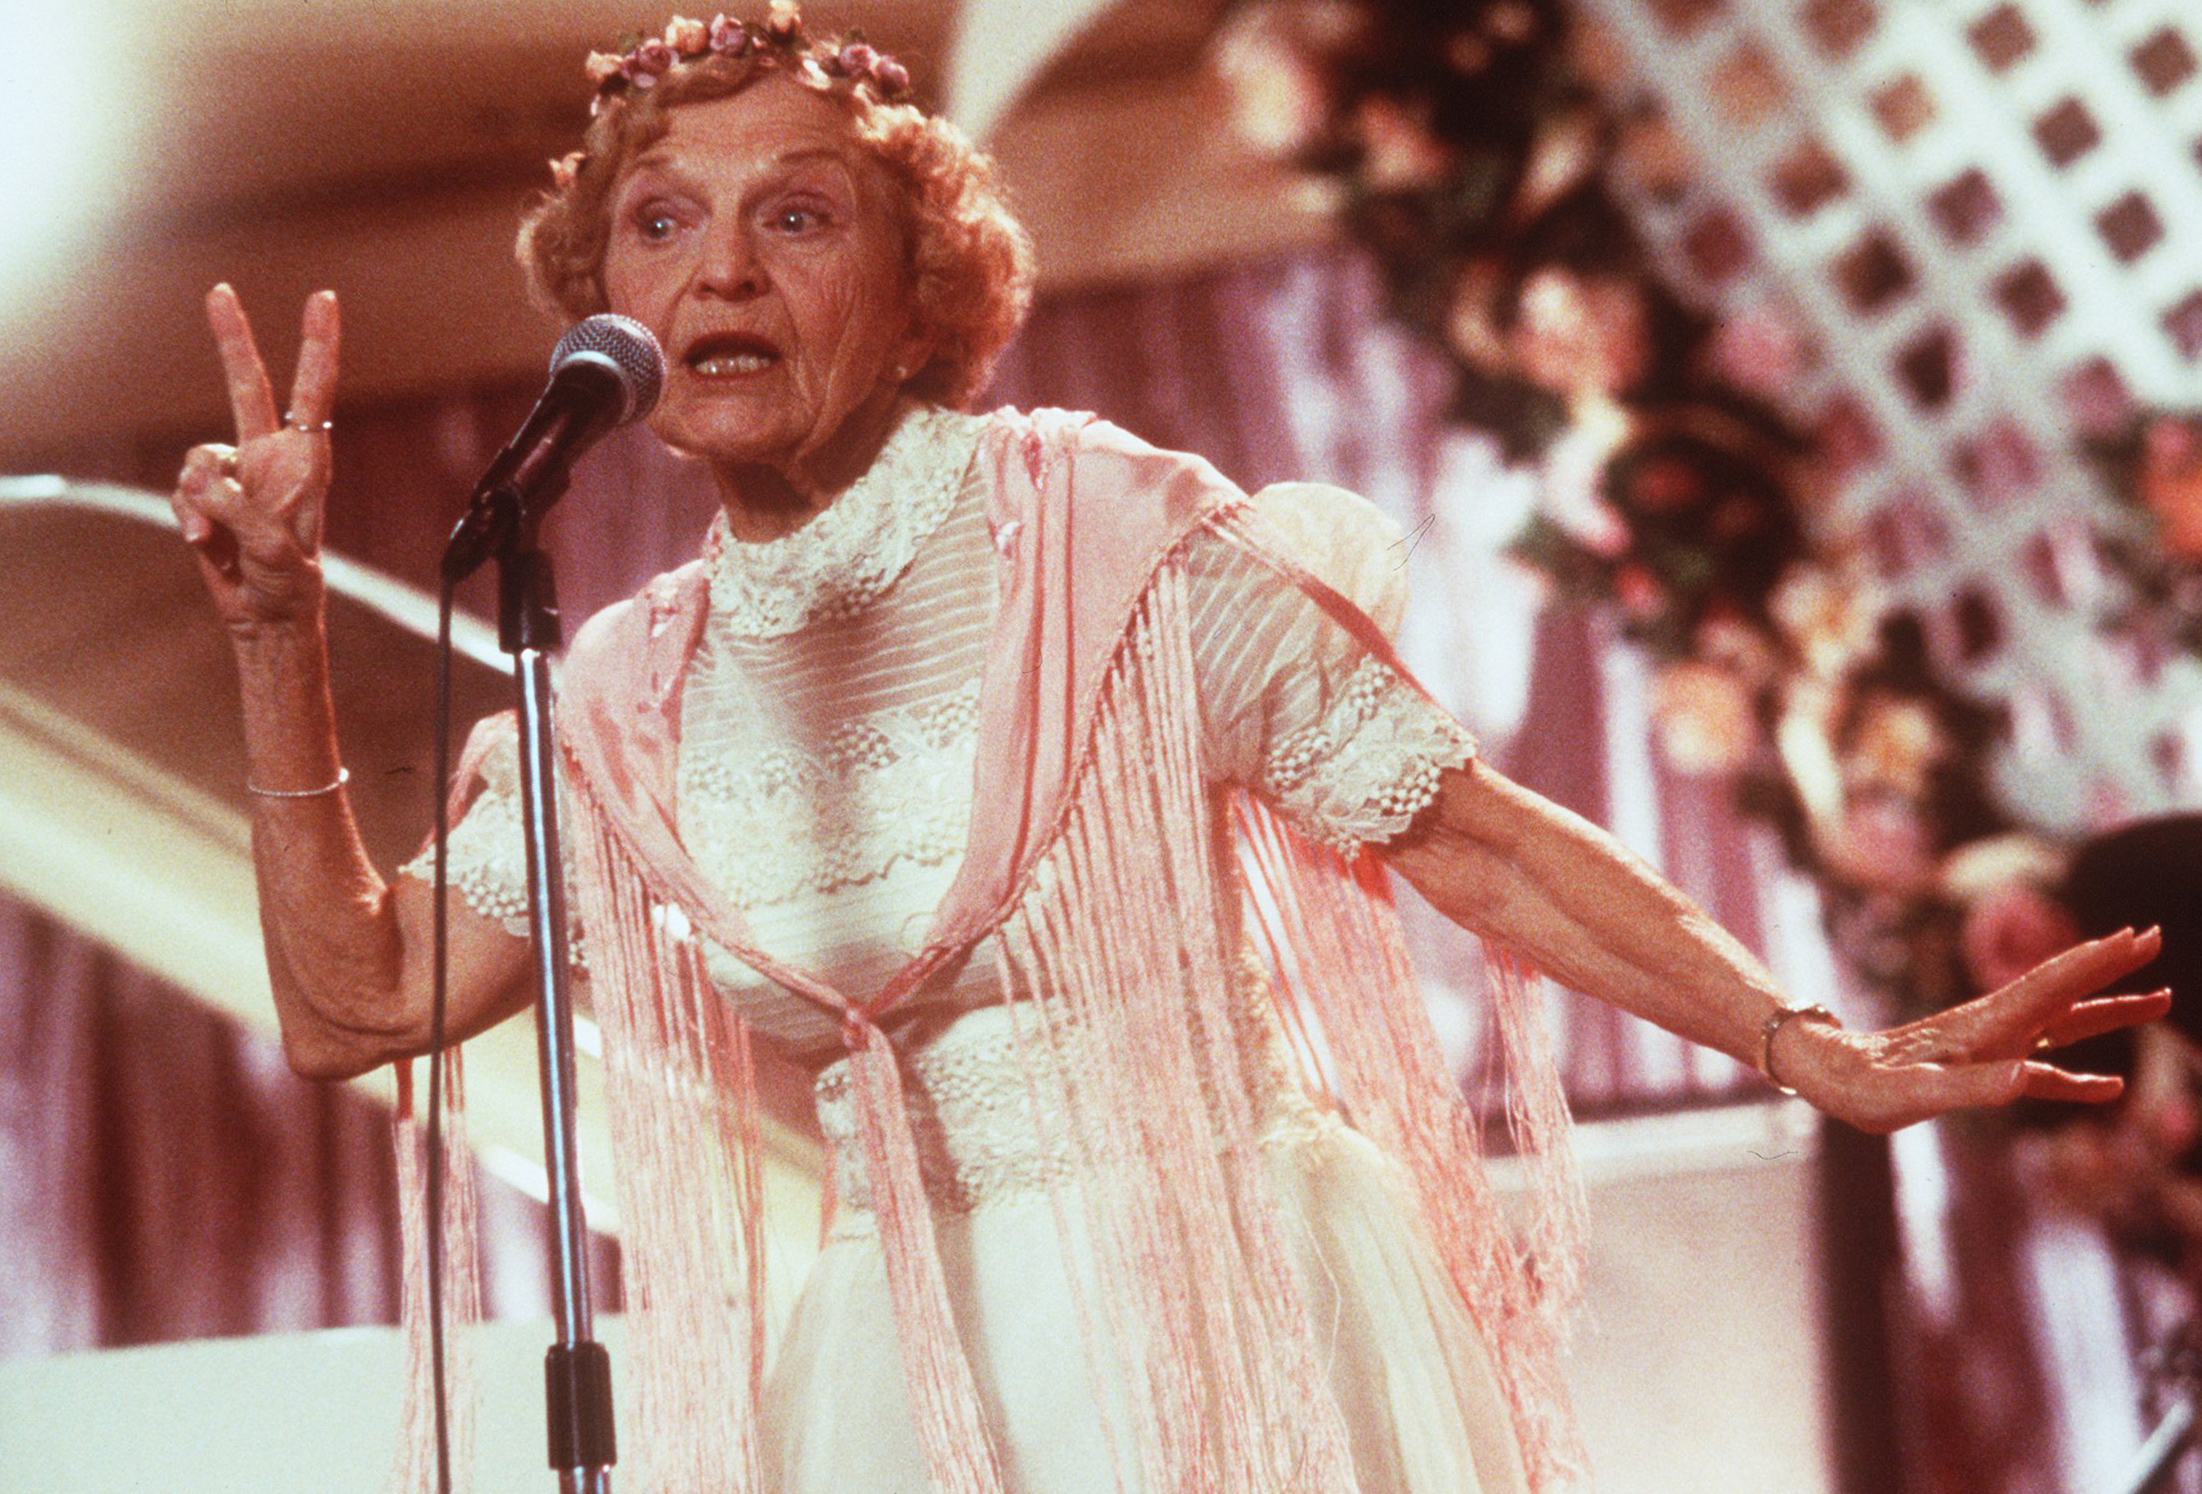 Ellen Albertini Dow stars as Rosie in New Line Cinema's comedy, "The Wedding Singer."